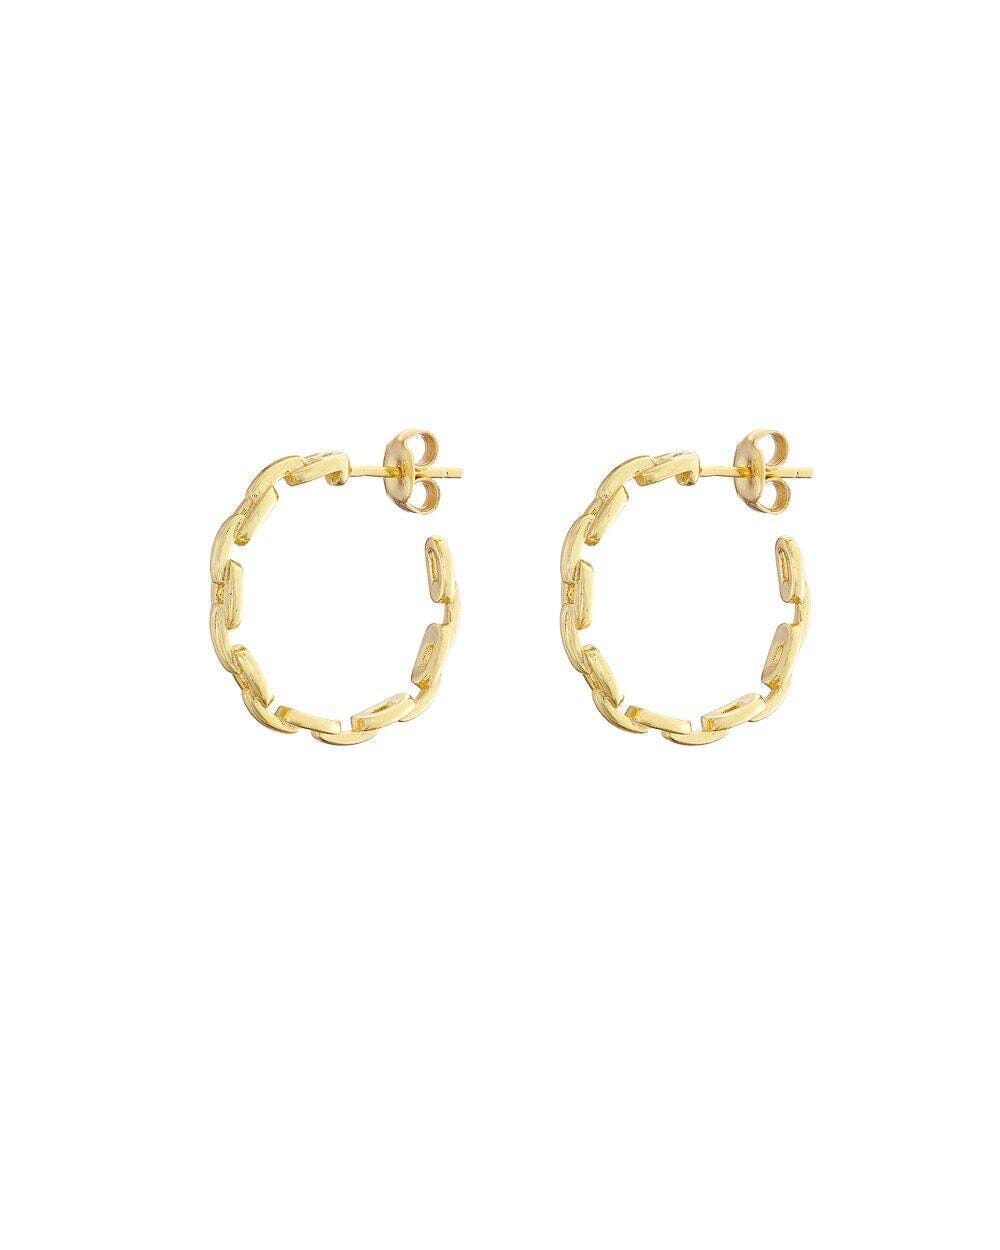 MARY K - GOLD LINK HOPP EARRINGS Jewellery & Accessories Mary K Jewellery 